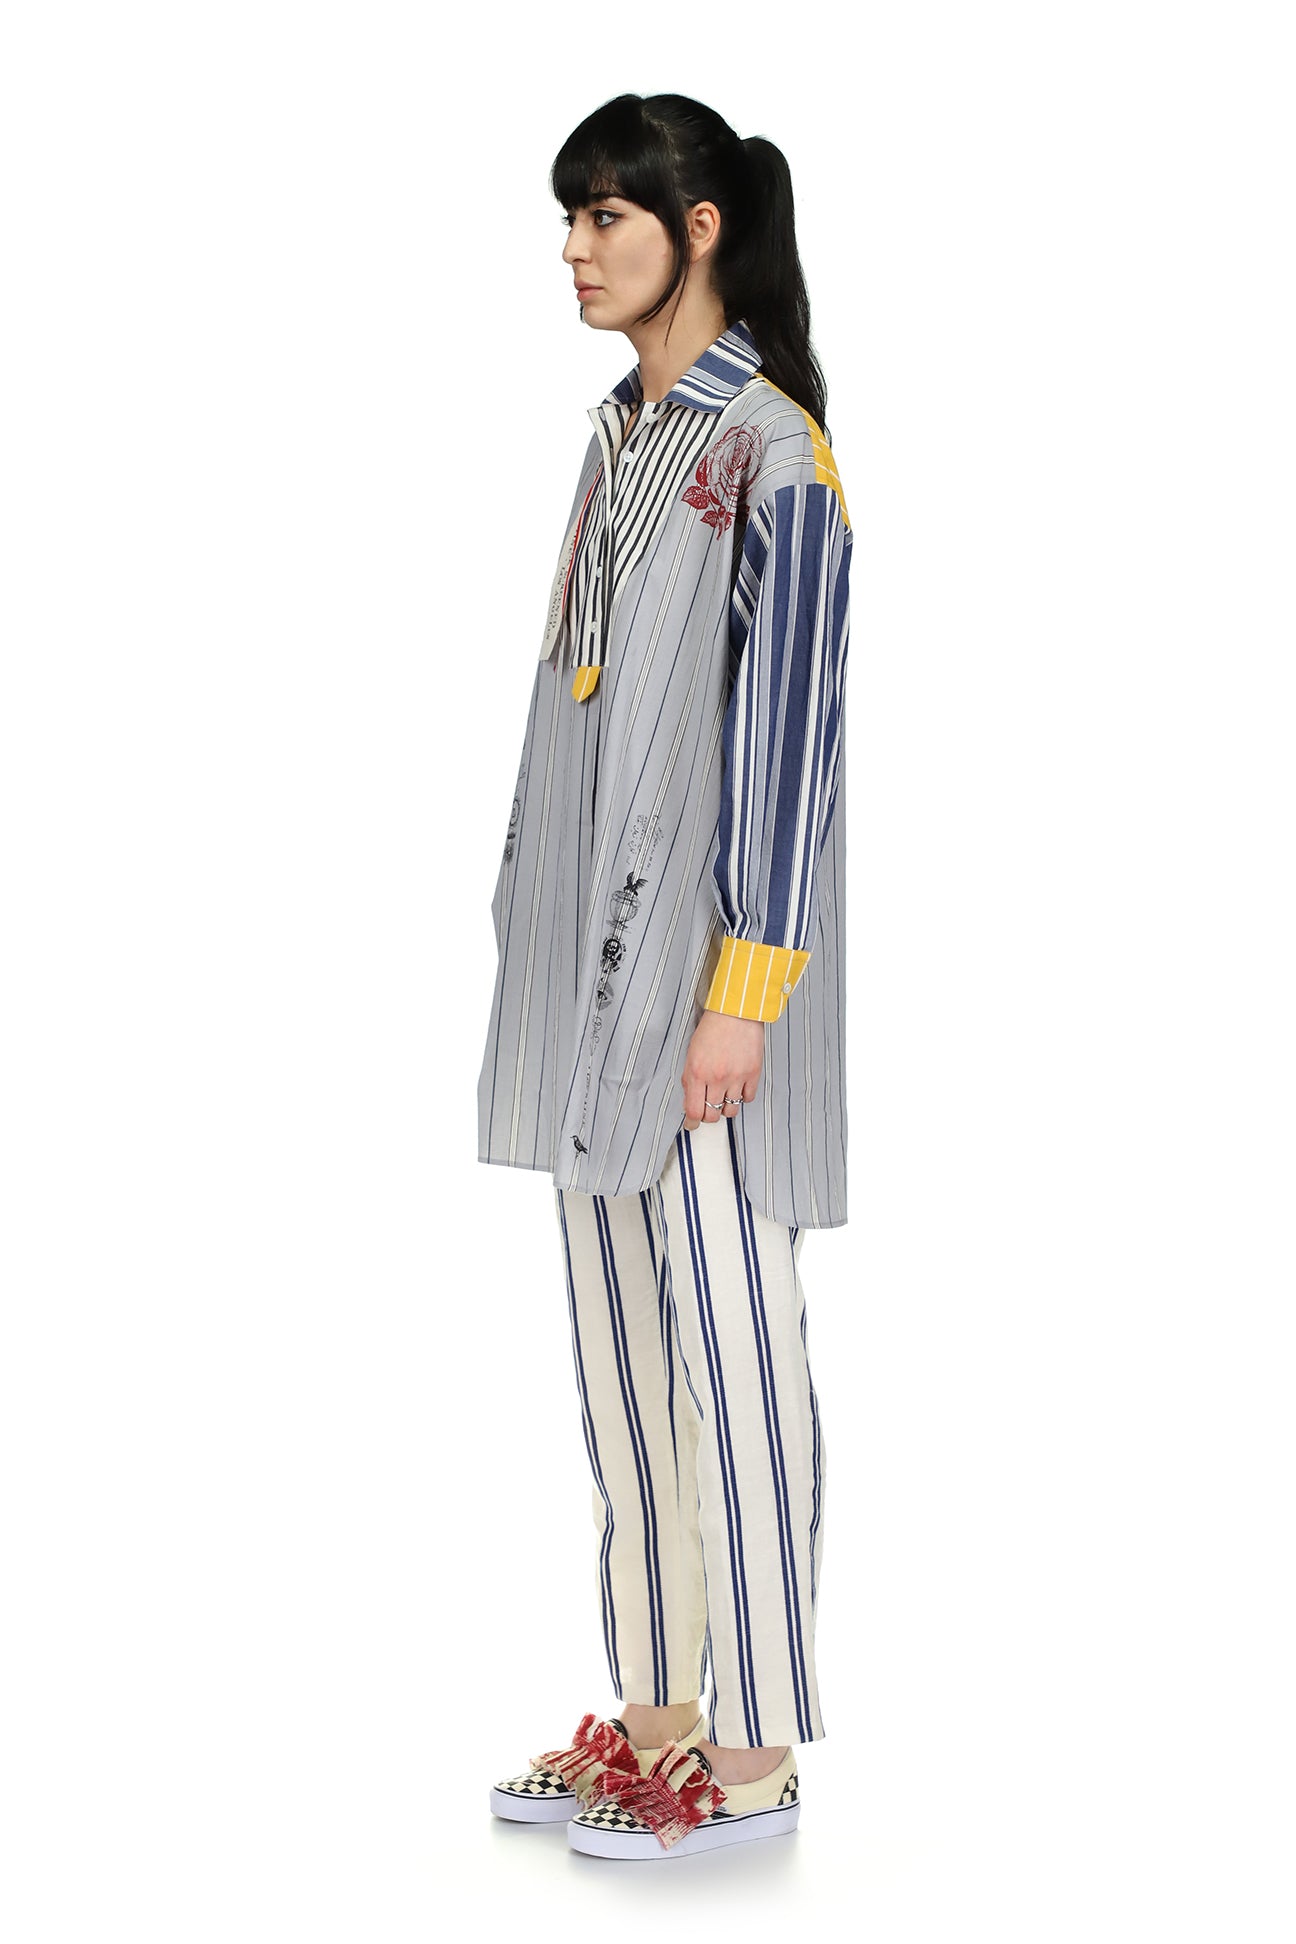 Silk Screen Melange Mixed Stripe Tunic - Women's Tops - Libertine